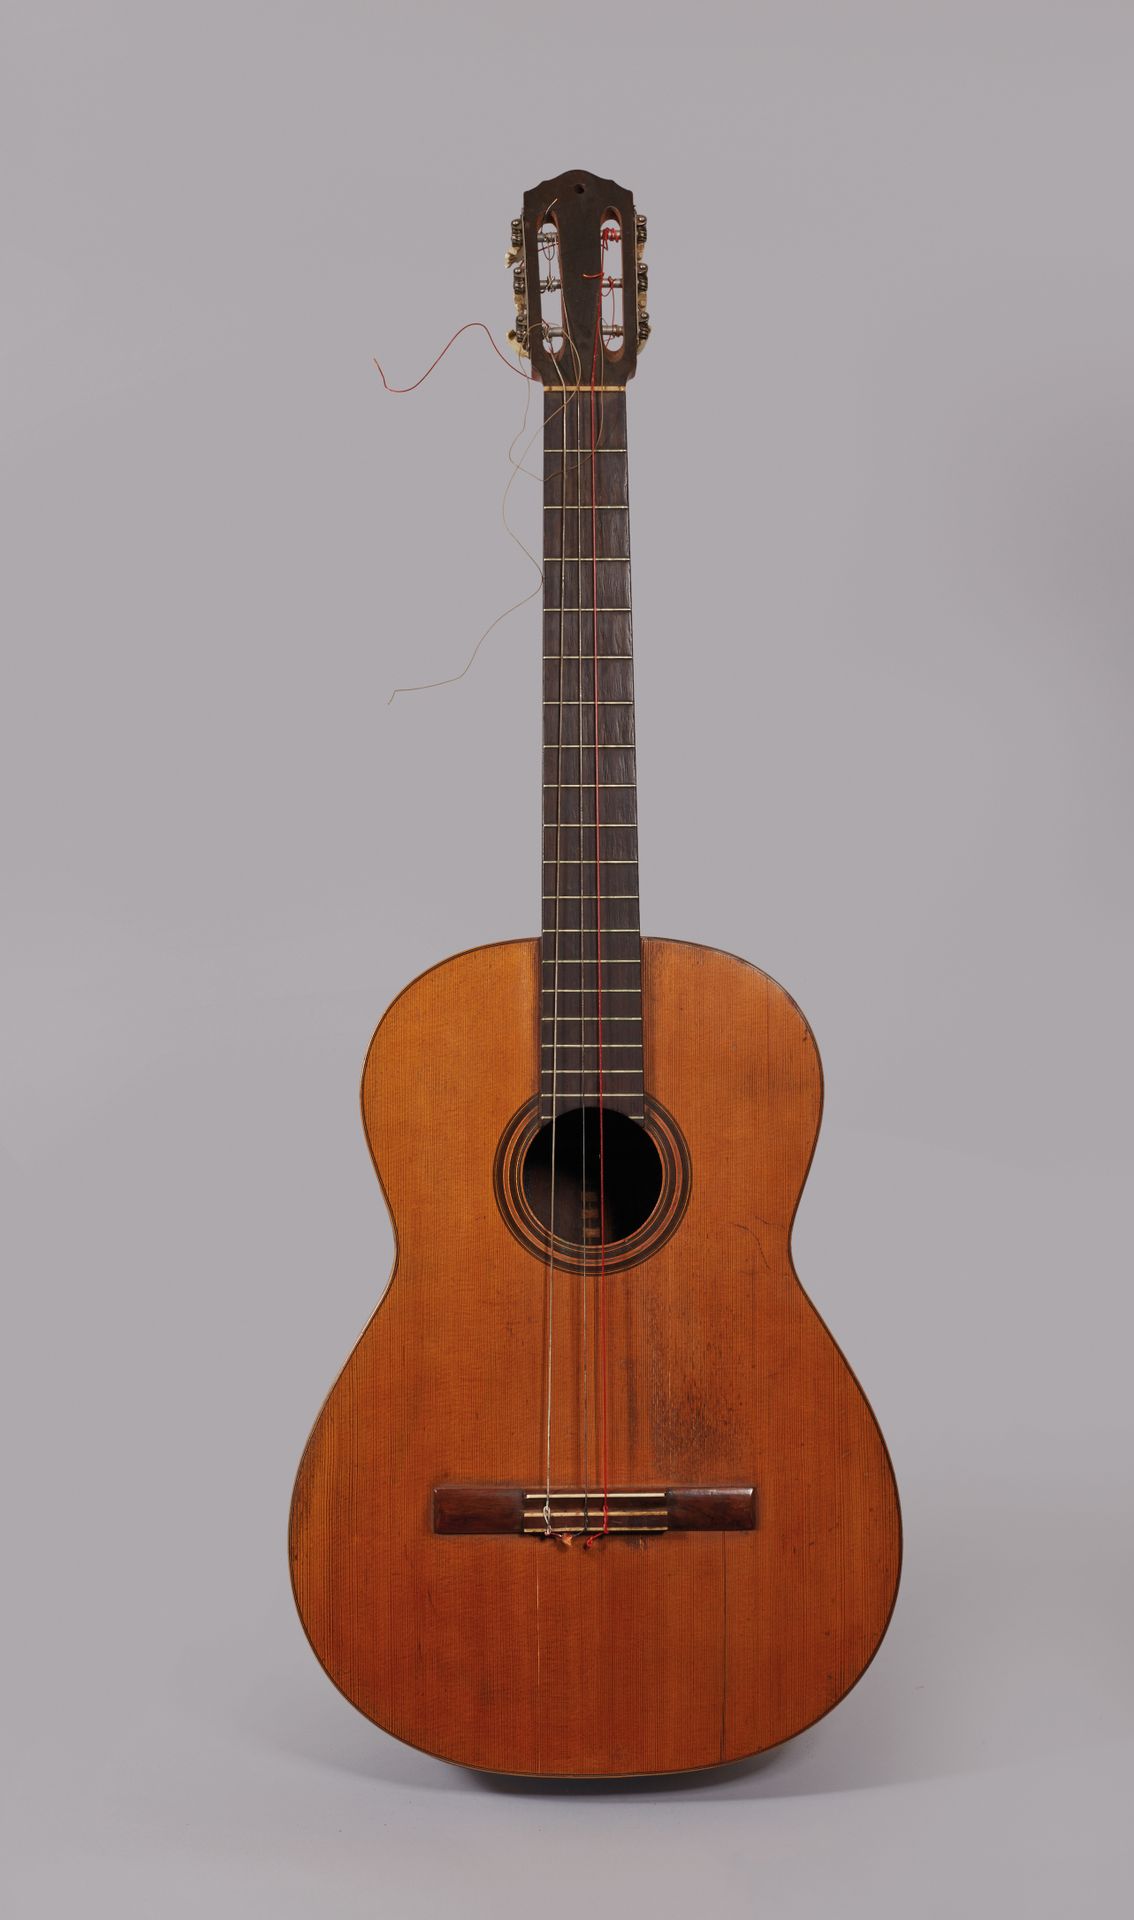 Null Classical guitar by Manuel RAMIREZ, vintage 1900 in Madrid.

It is written &hellip;